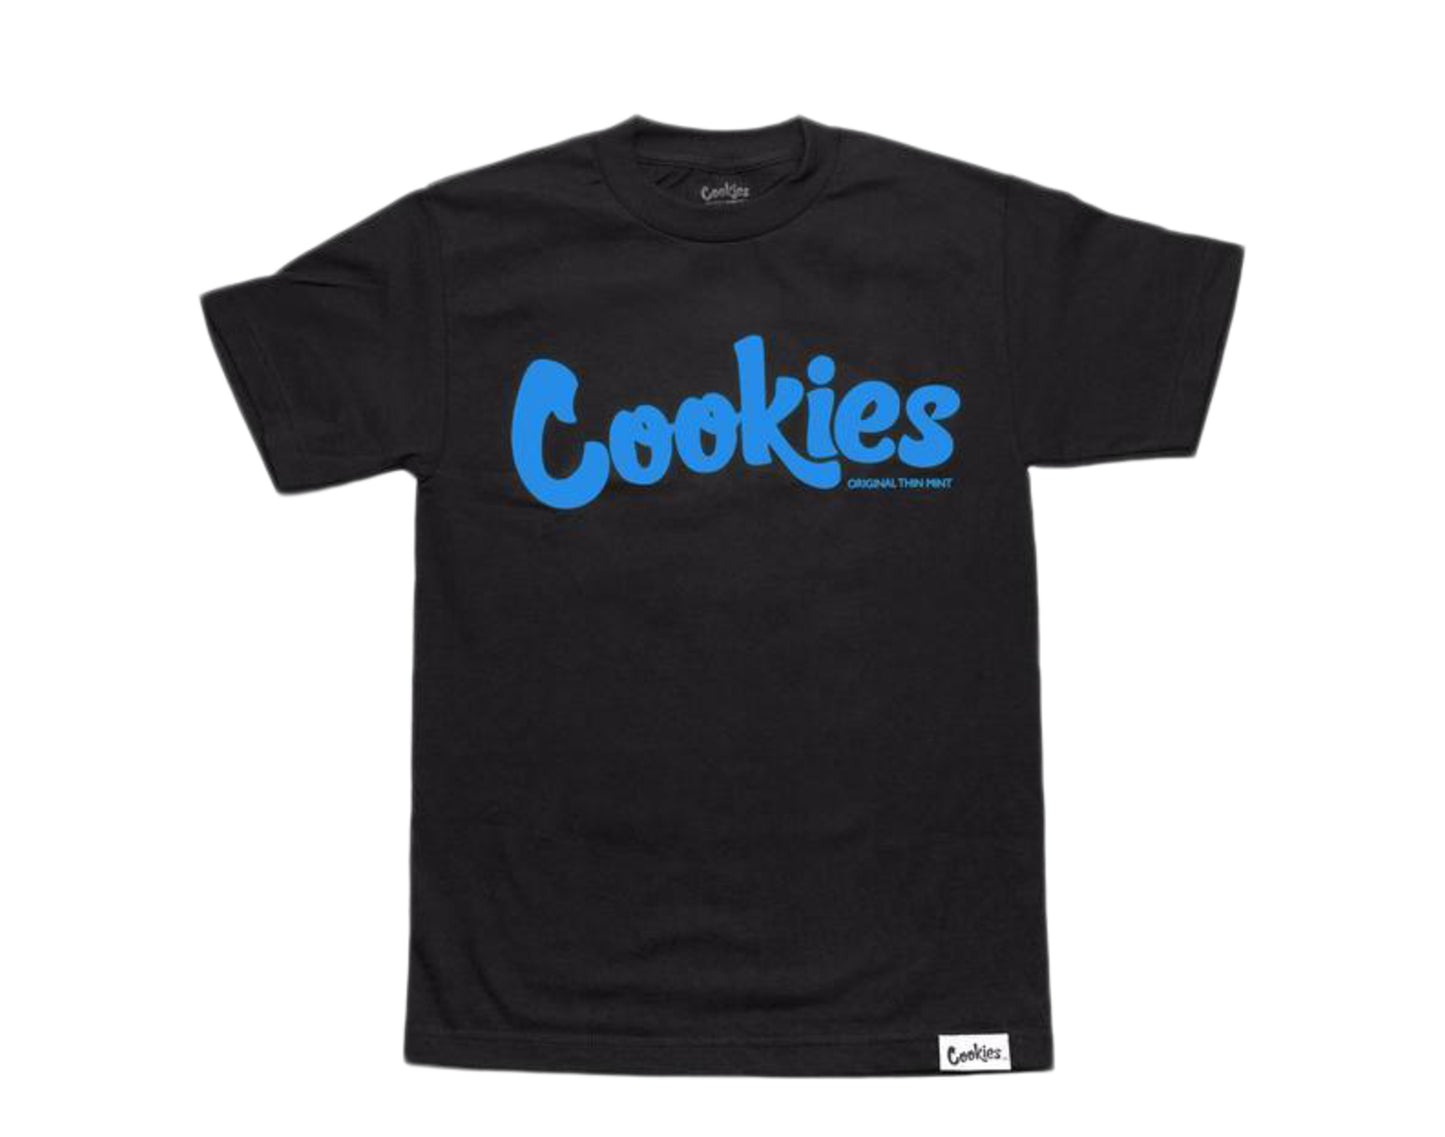 Cookies Original Logo Thin Mint Black/Blue Men's Tee Shirt 1536T3318-BKB